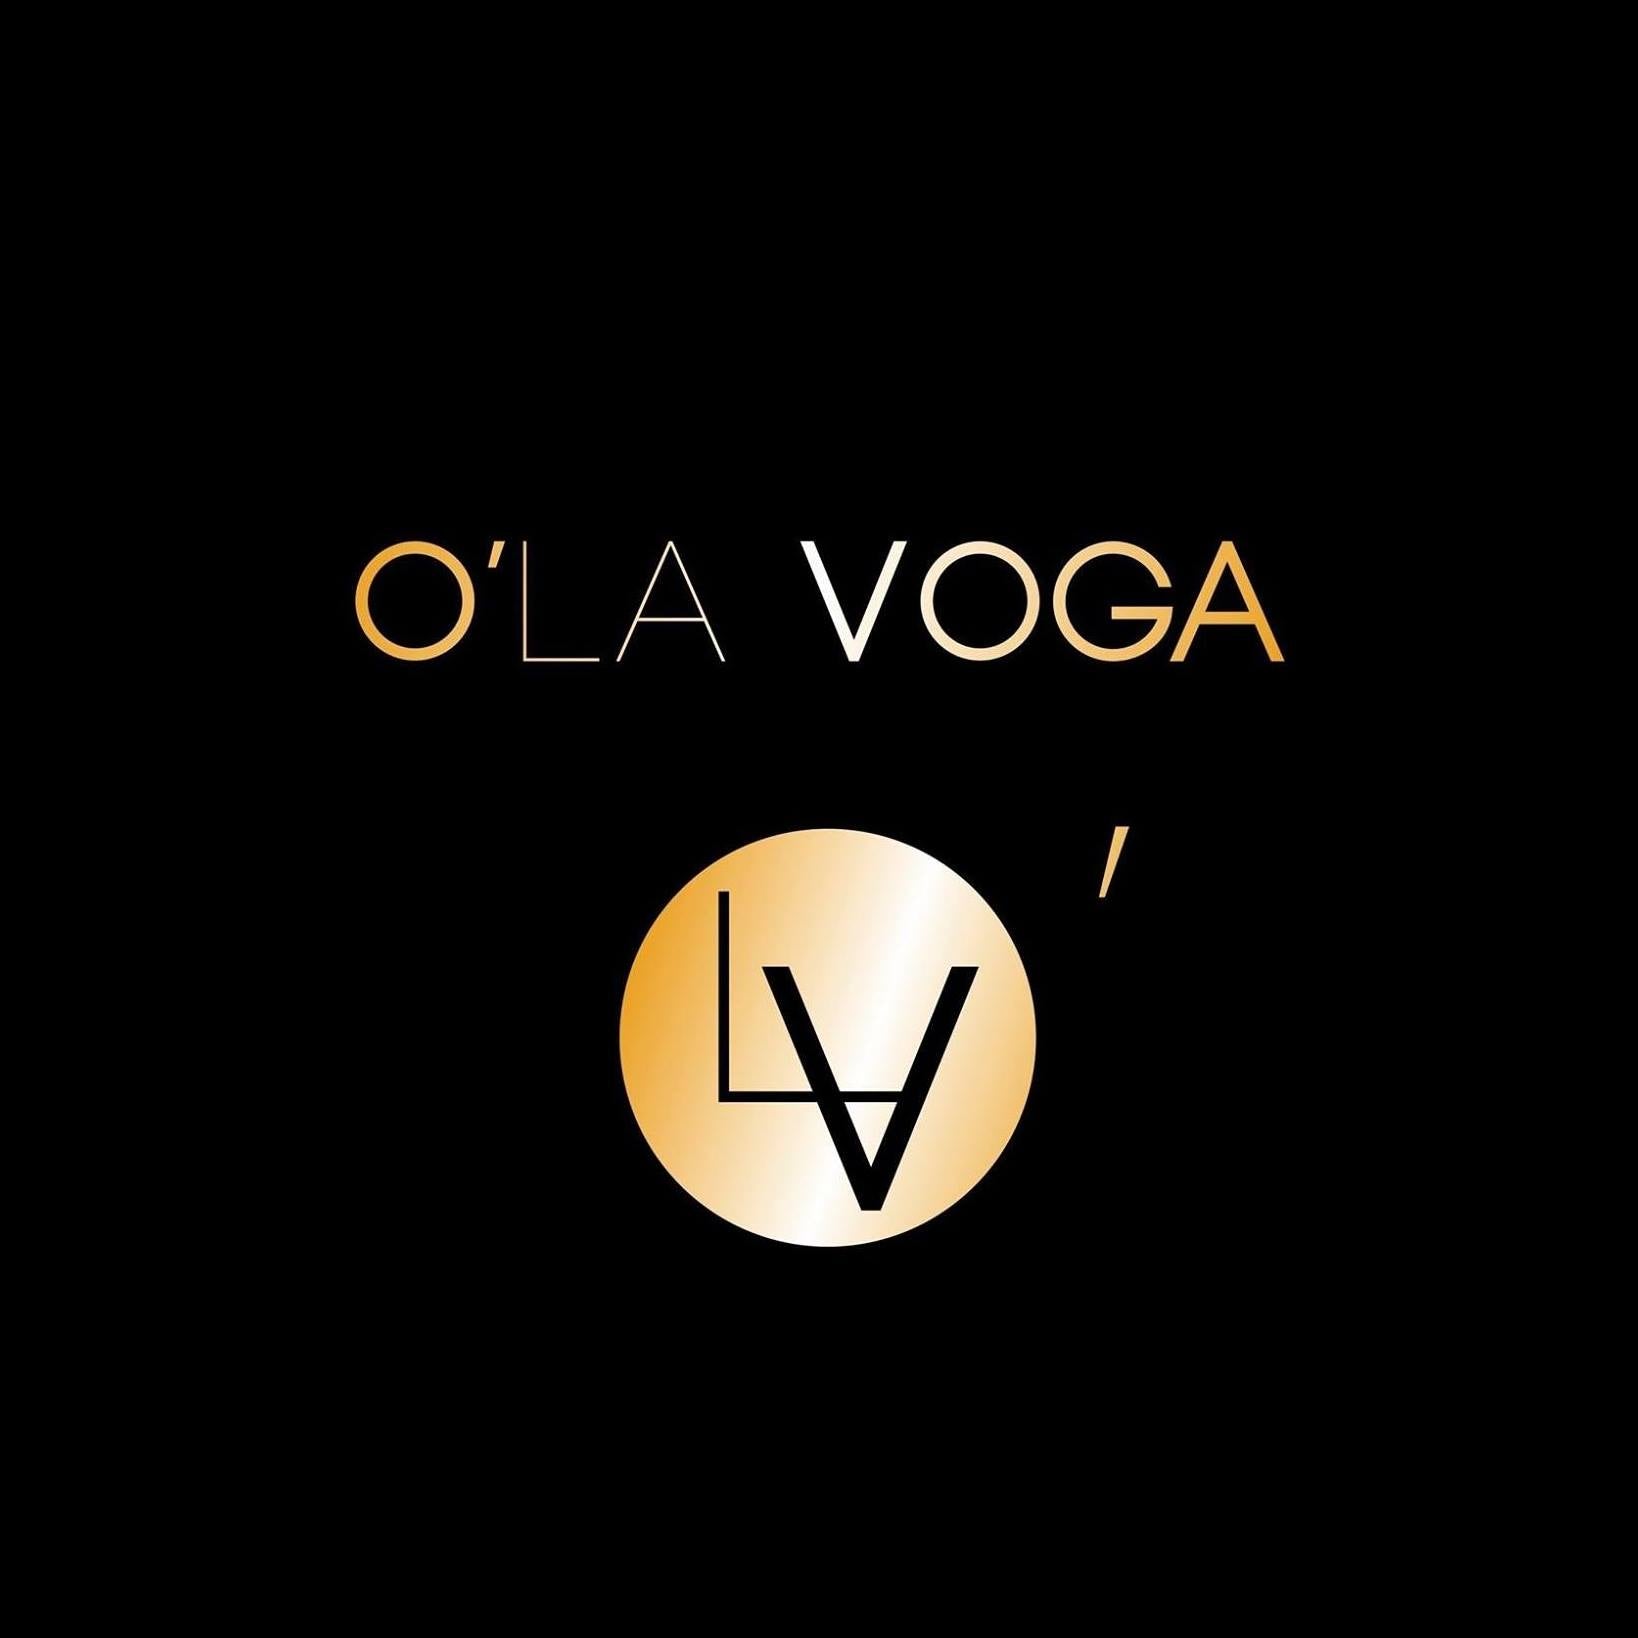 O la voga - O la voga added a new photo.